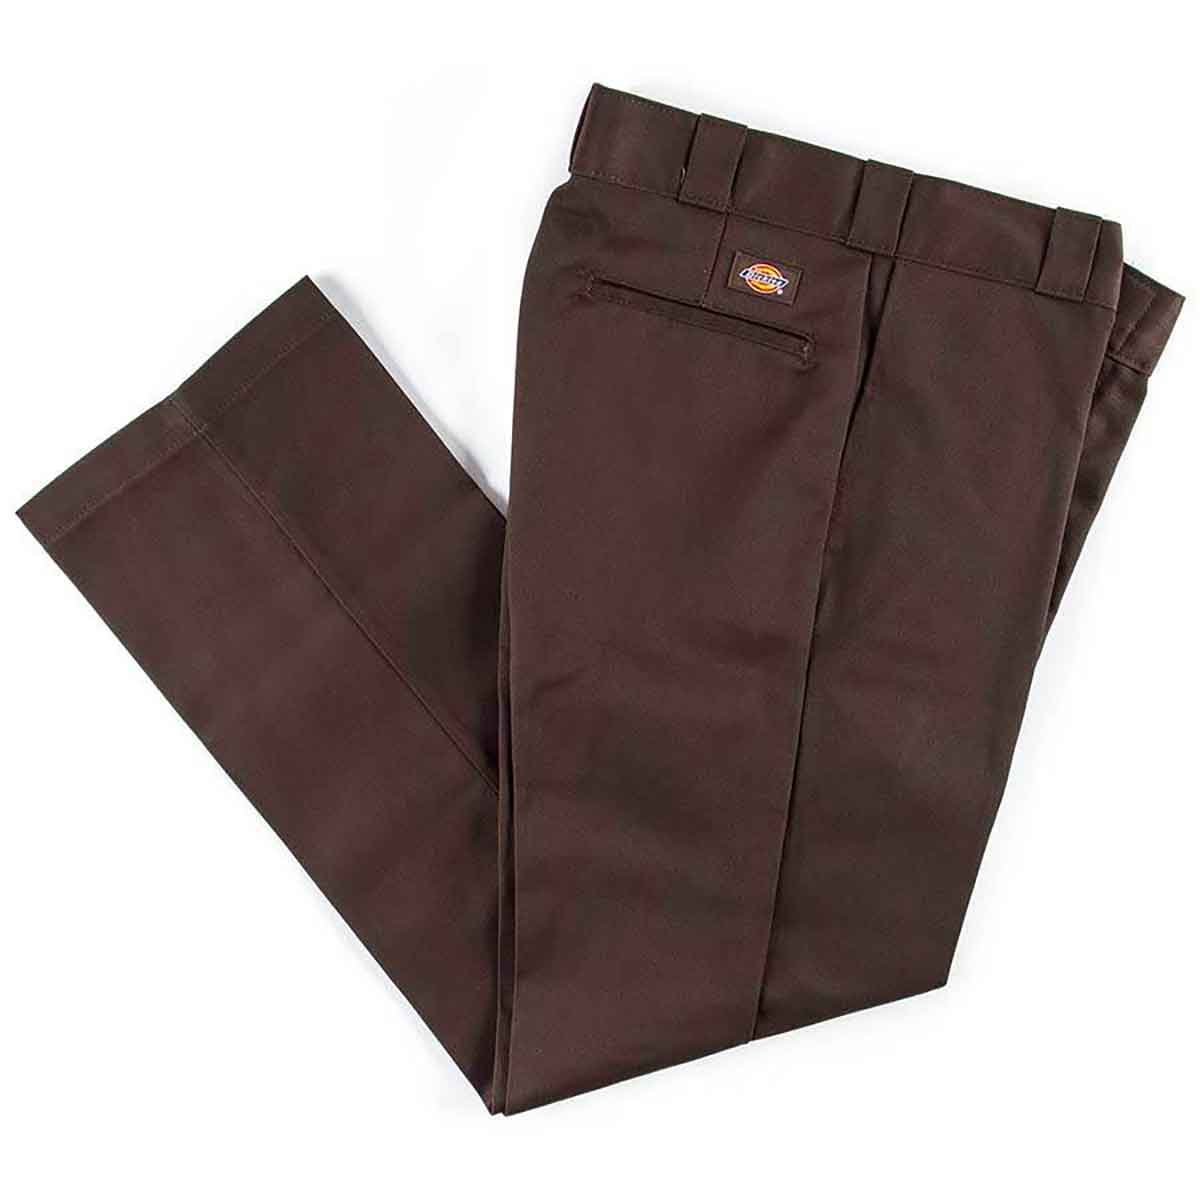 Dickies 874 Charcoal Traditional Work Pants